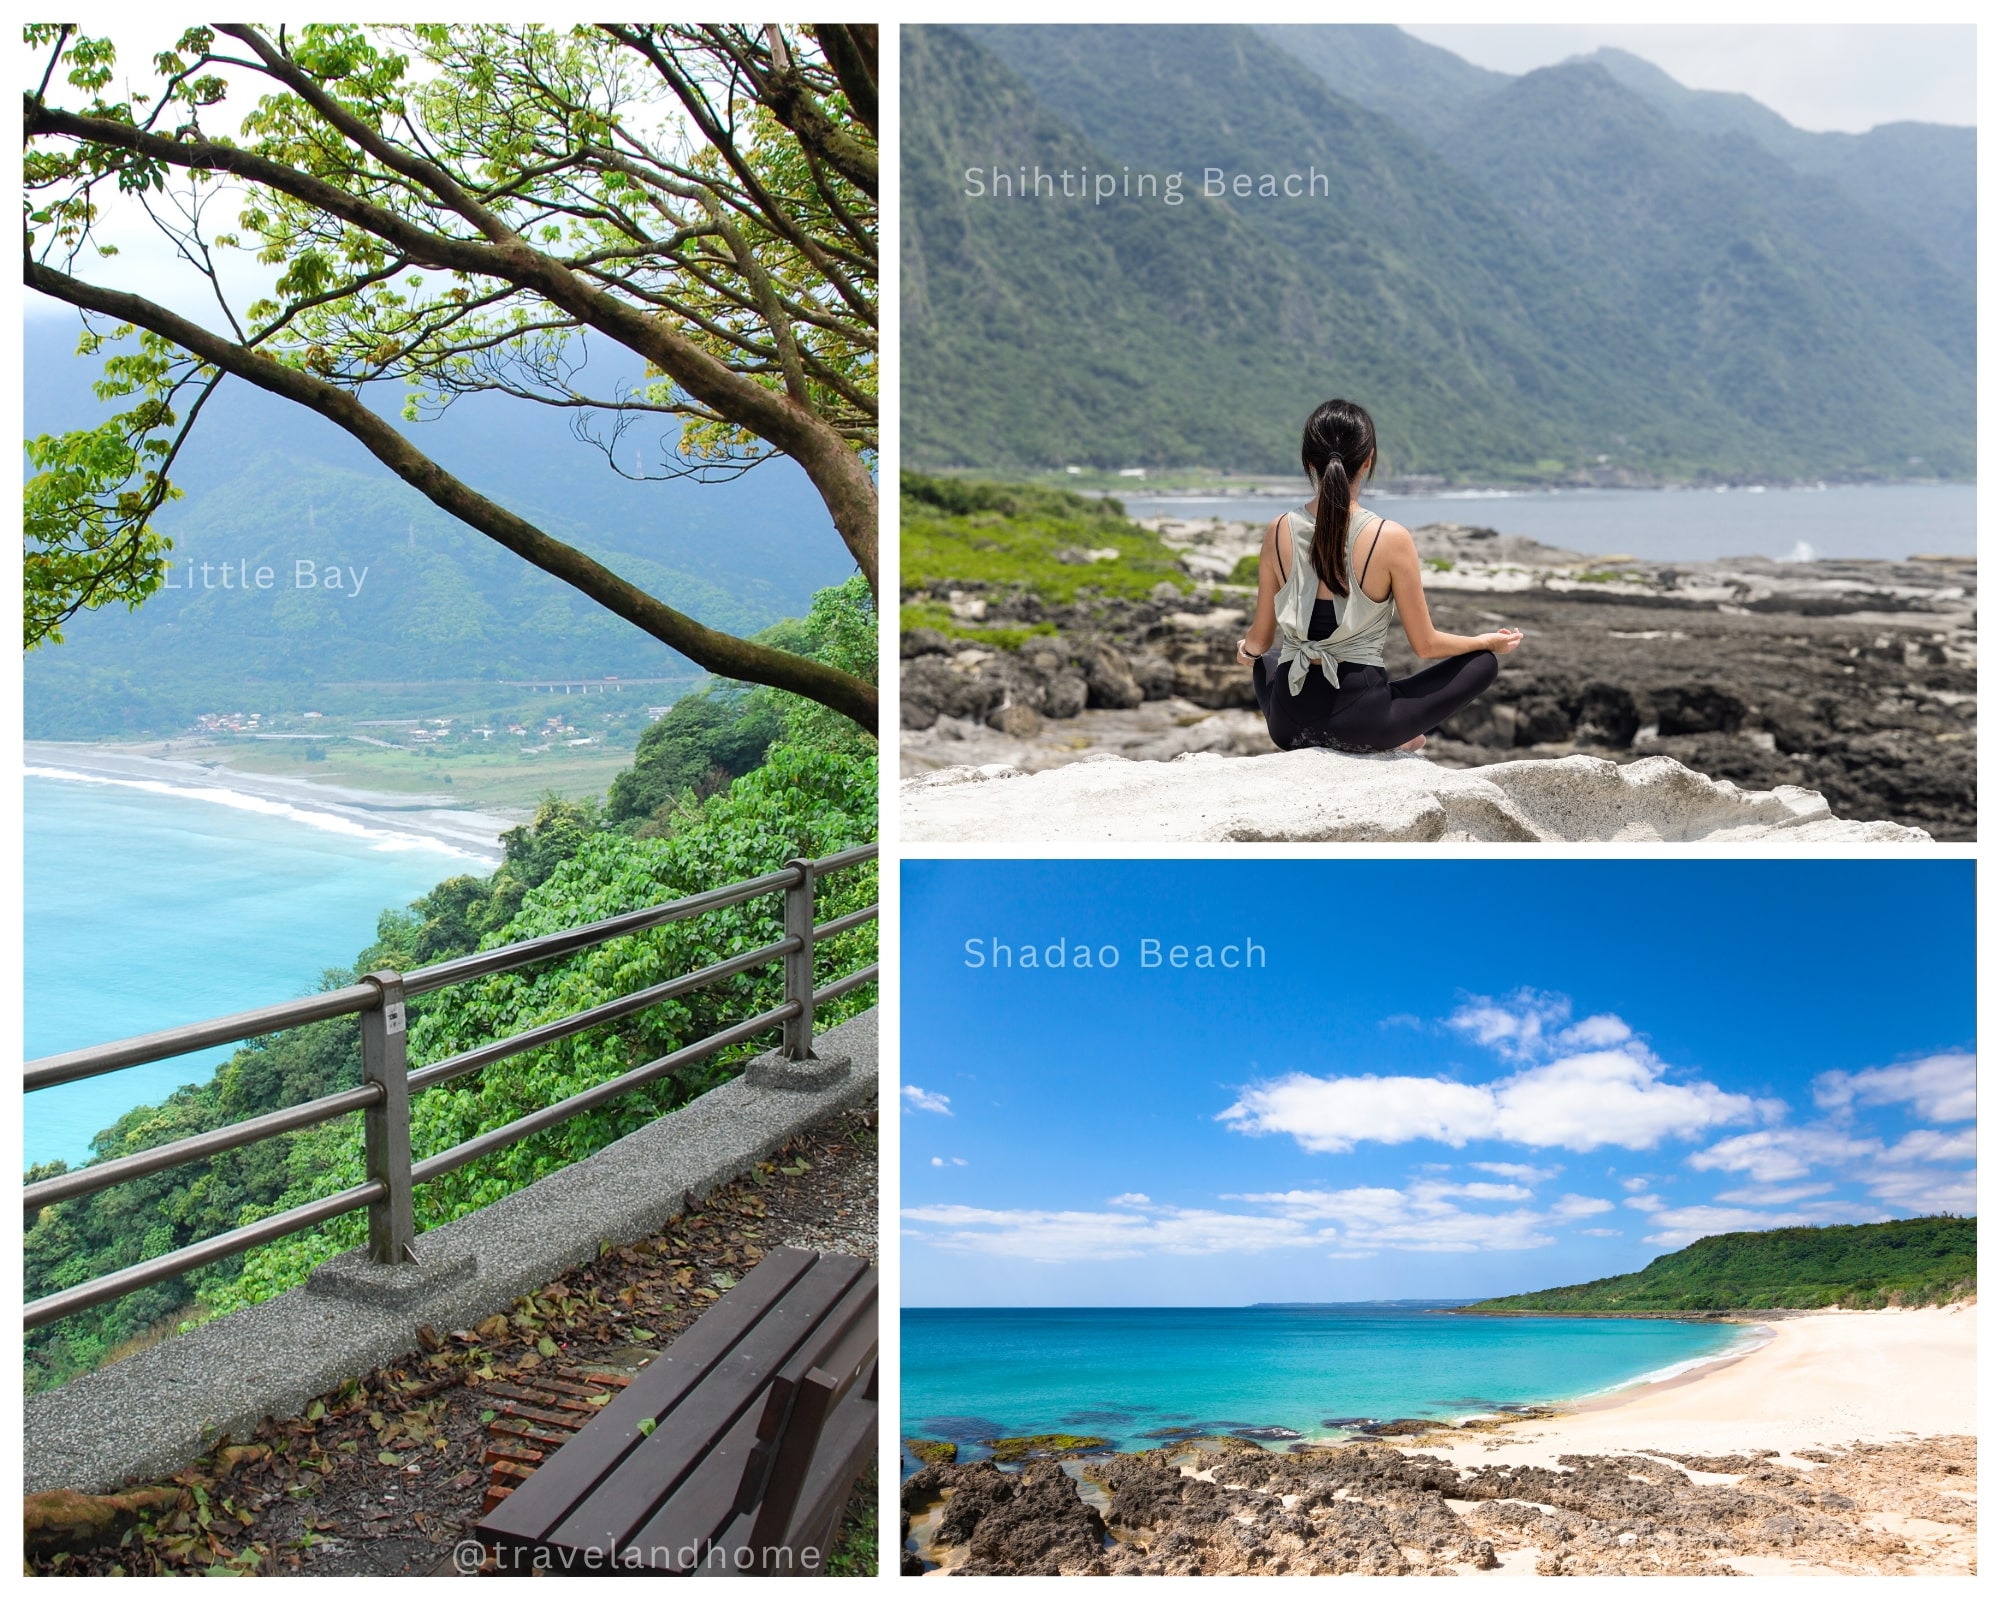 Best beaches in Taiwan, shihtiping beach, shadao beach, little bay min